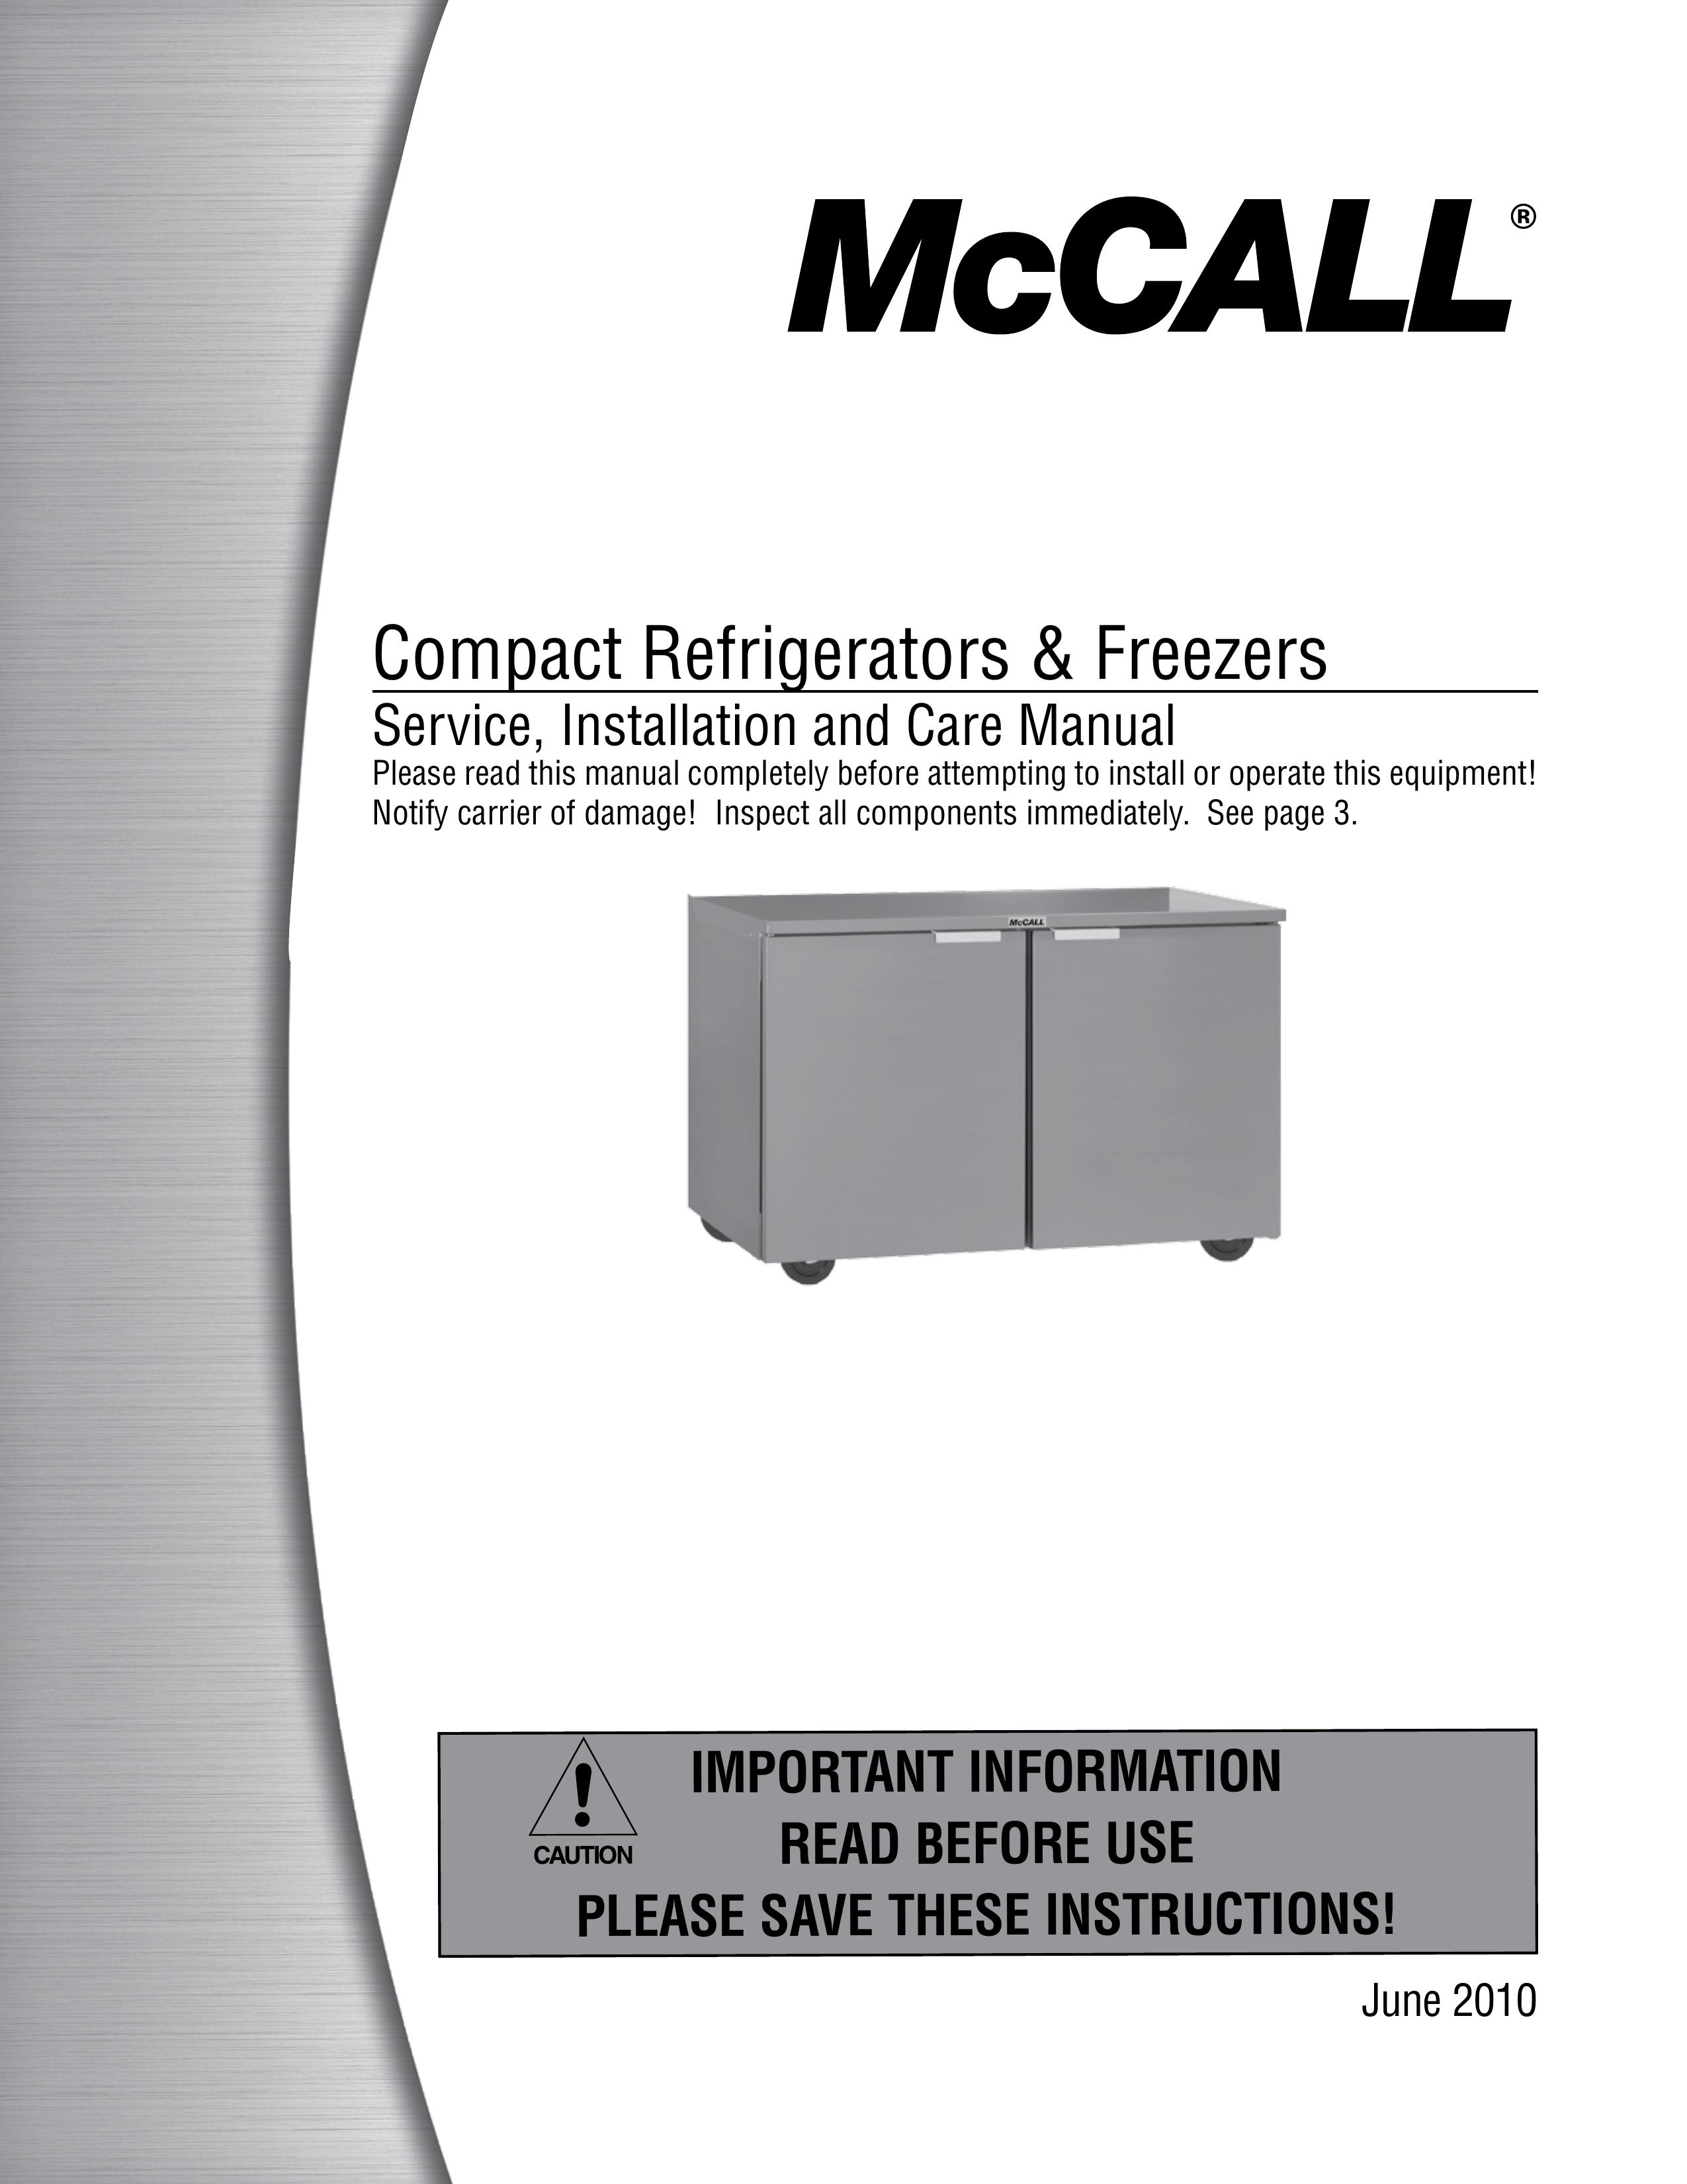 McCall Refrigeration MCCR48 Refrigerator User Manual